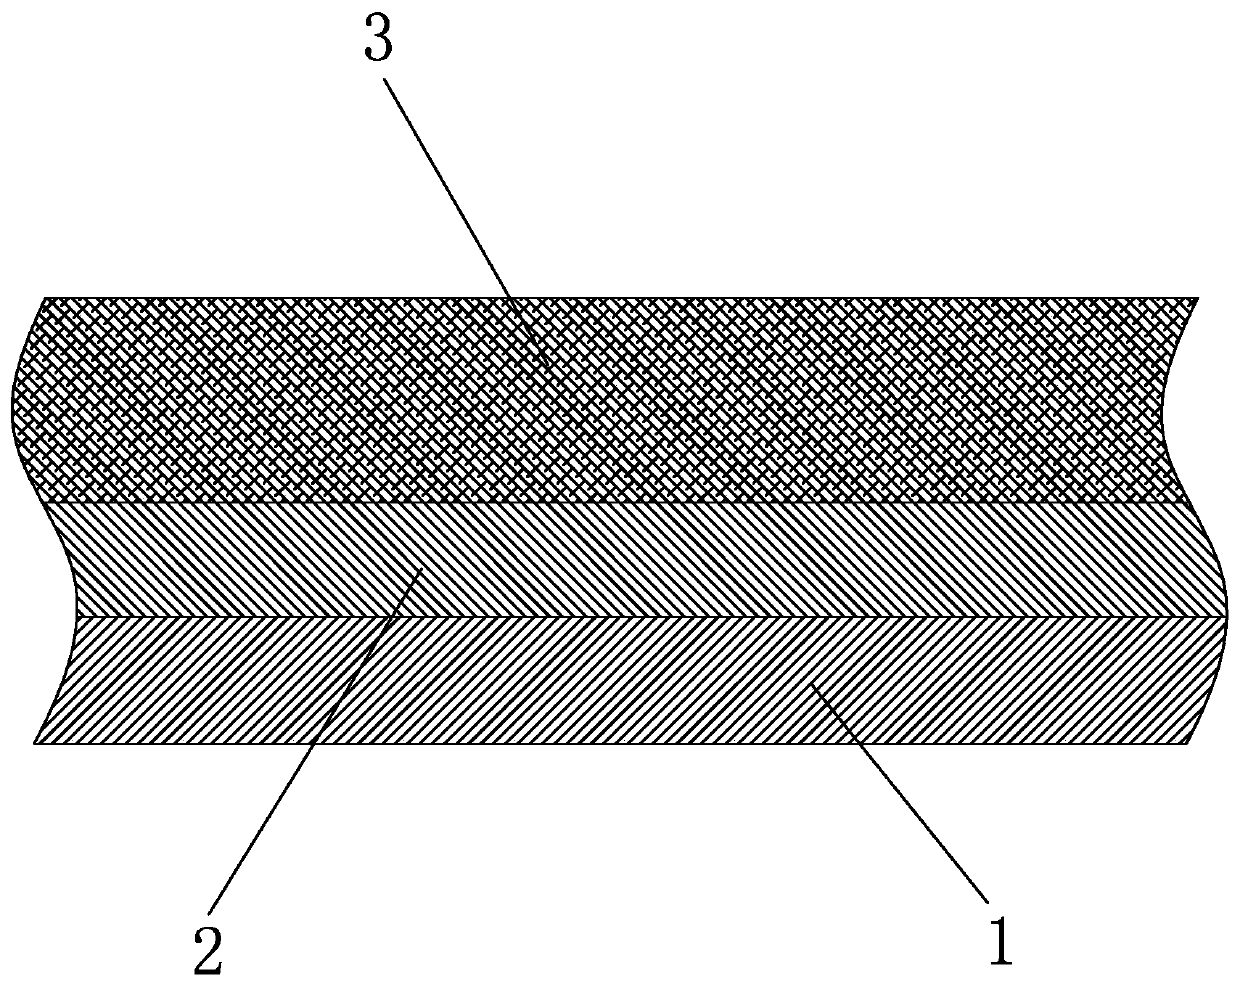 Vortex spun electromagnetic shielding fabric and textile method